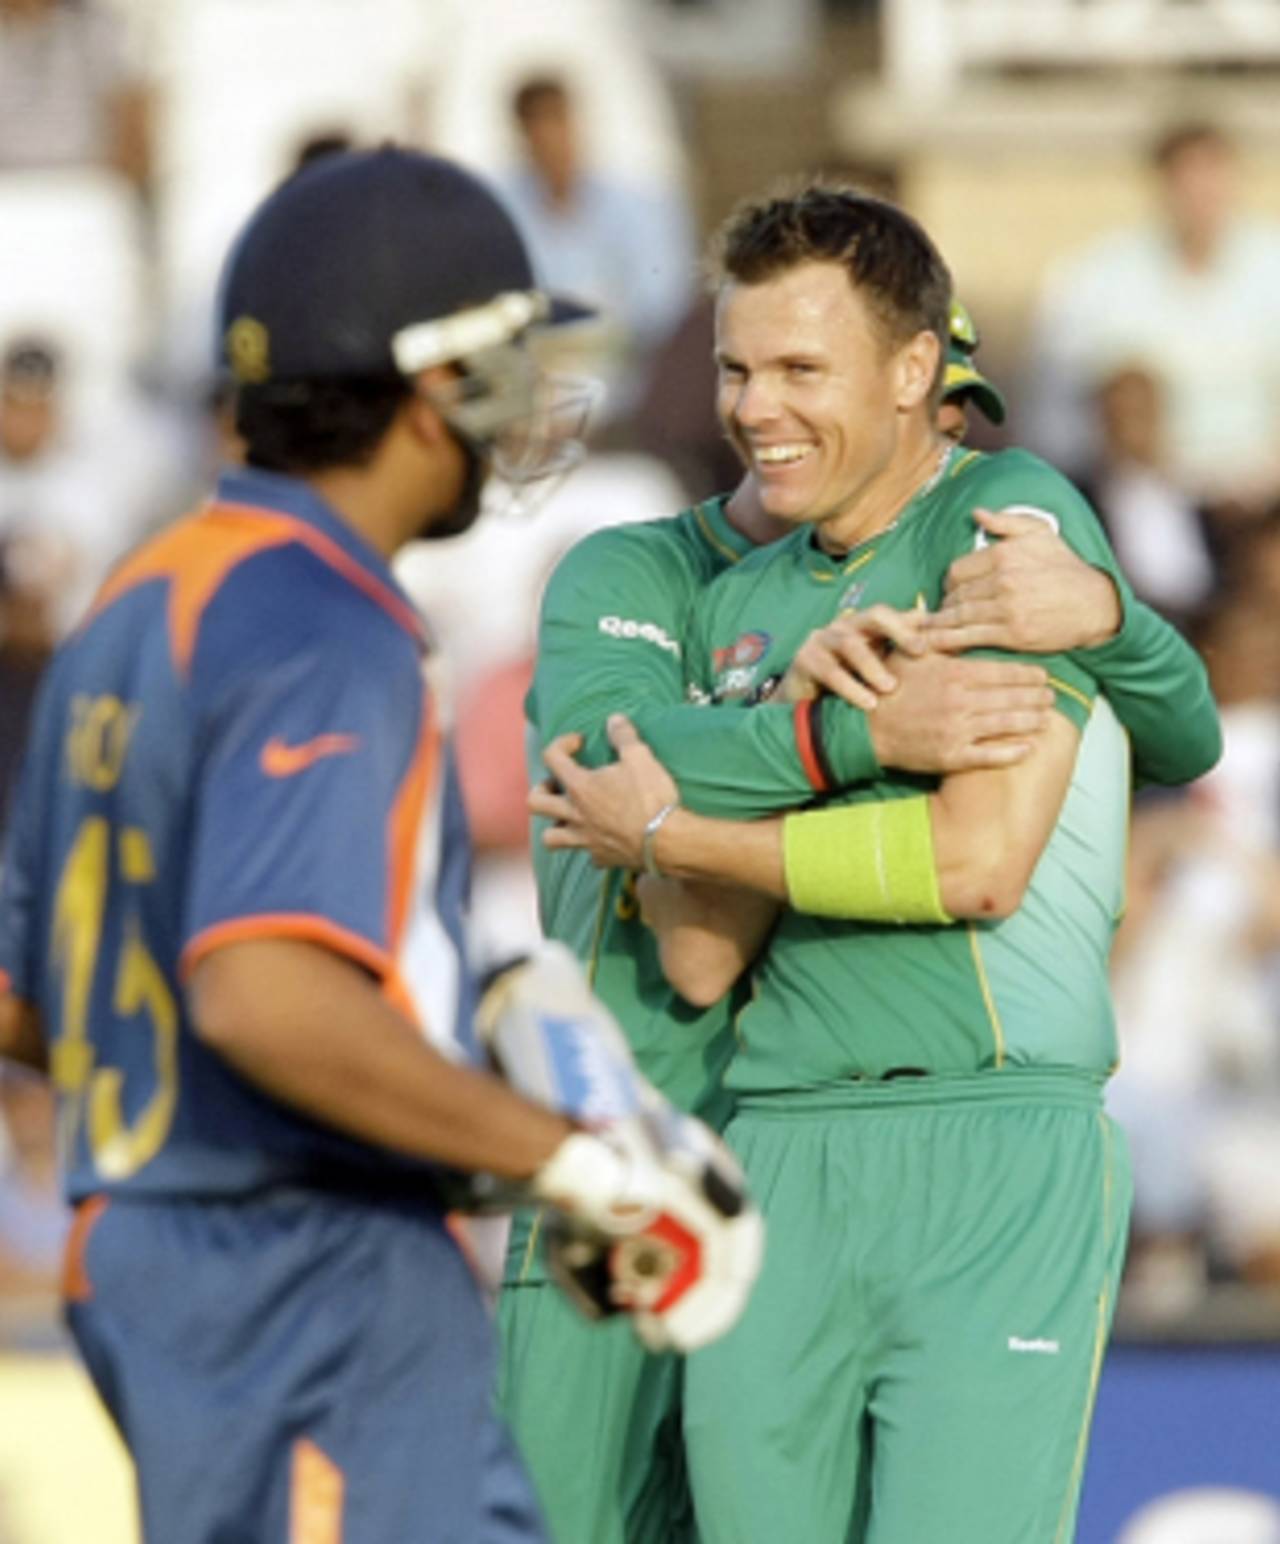 Johan Botha picked up 3 for 16, India v South Africa, ICC World Twenty20 Super Eights, Trent Bridge, June 16, 2009 